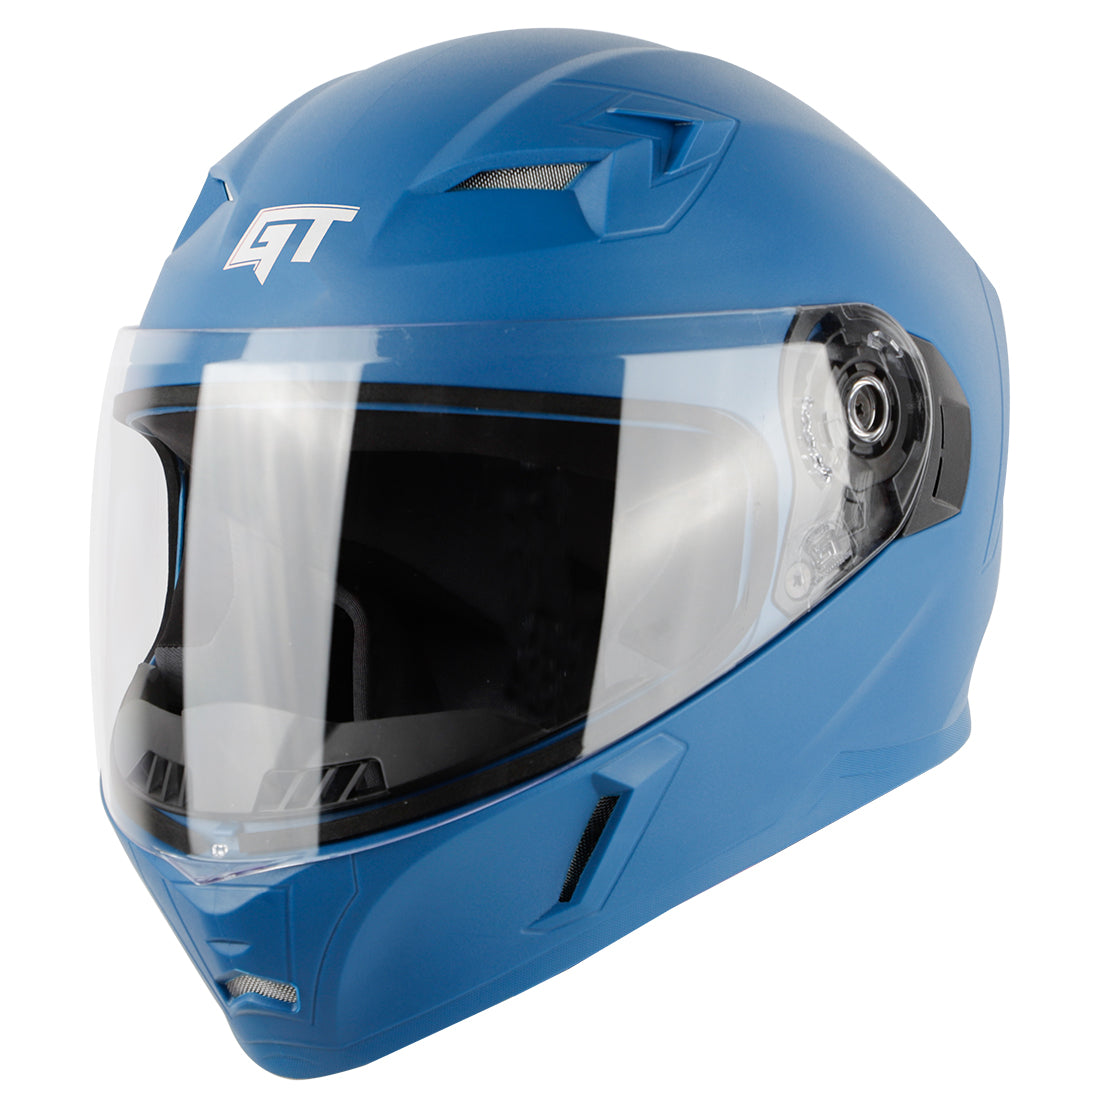 Steelbird SBA-21 GT Full Face Helmet with Clear Visor (Dashing Blue)